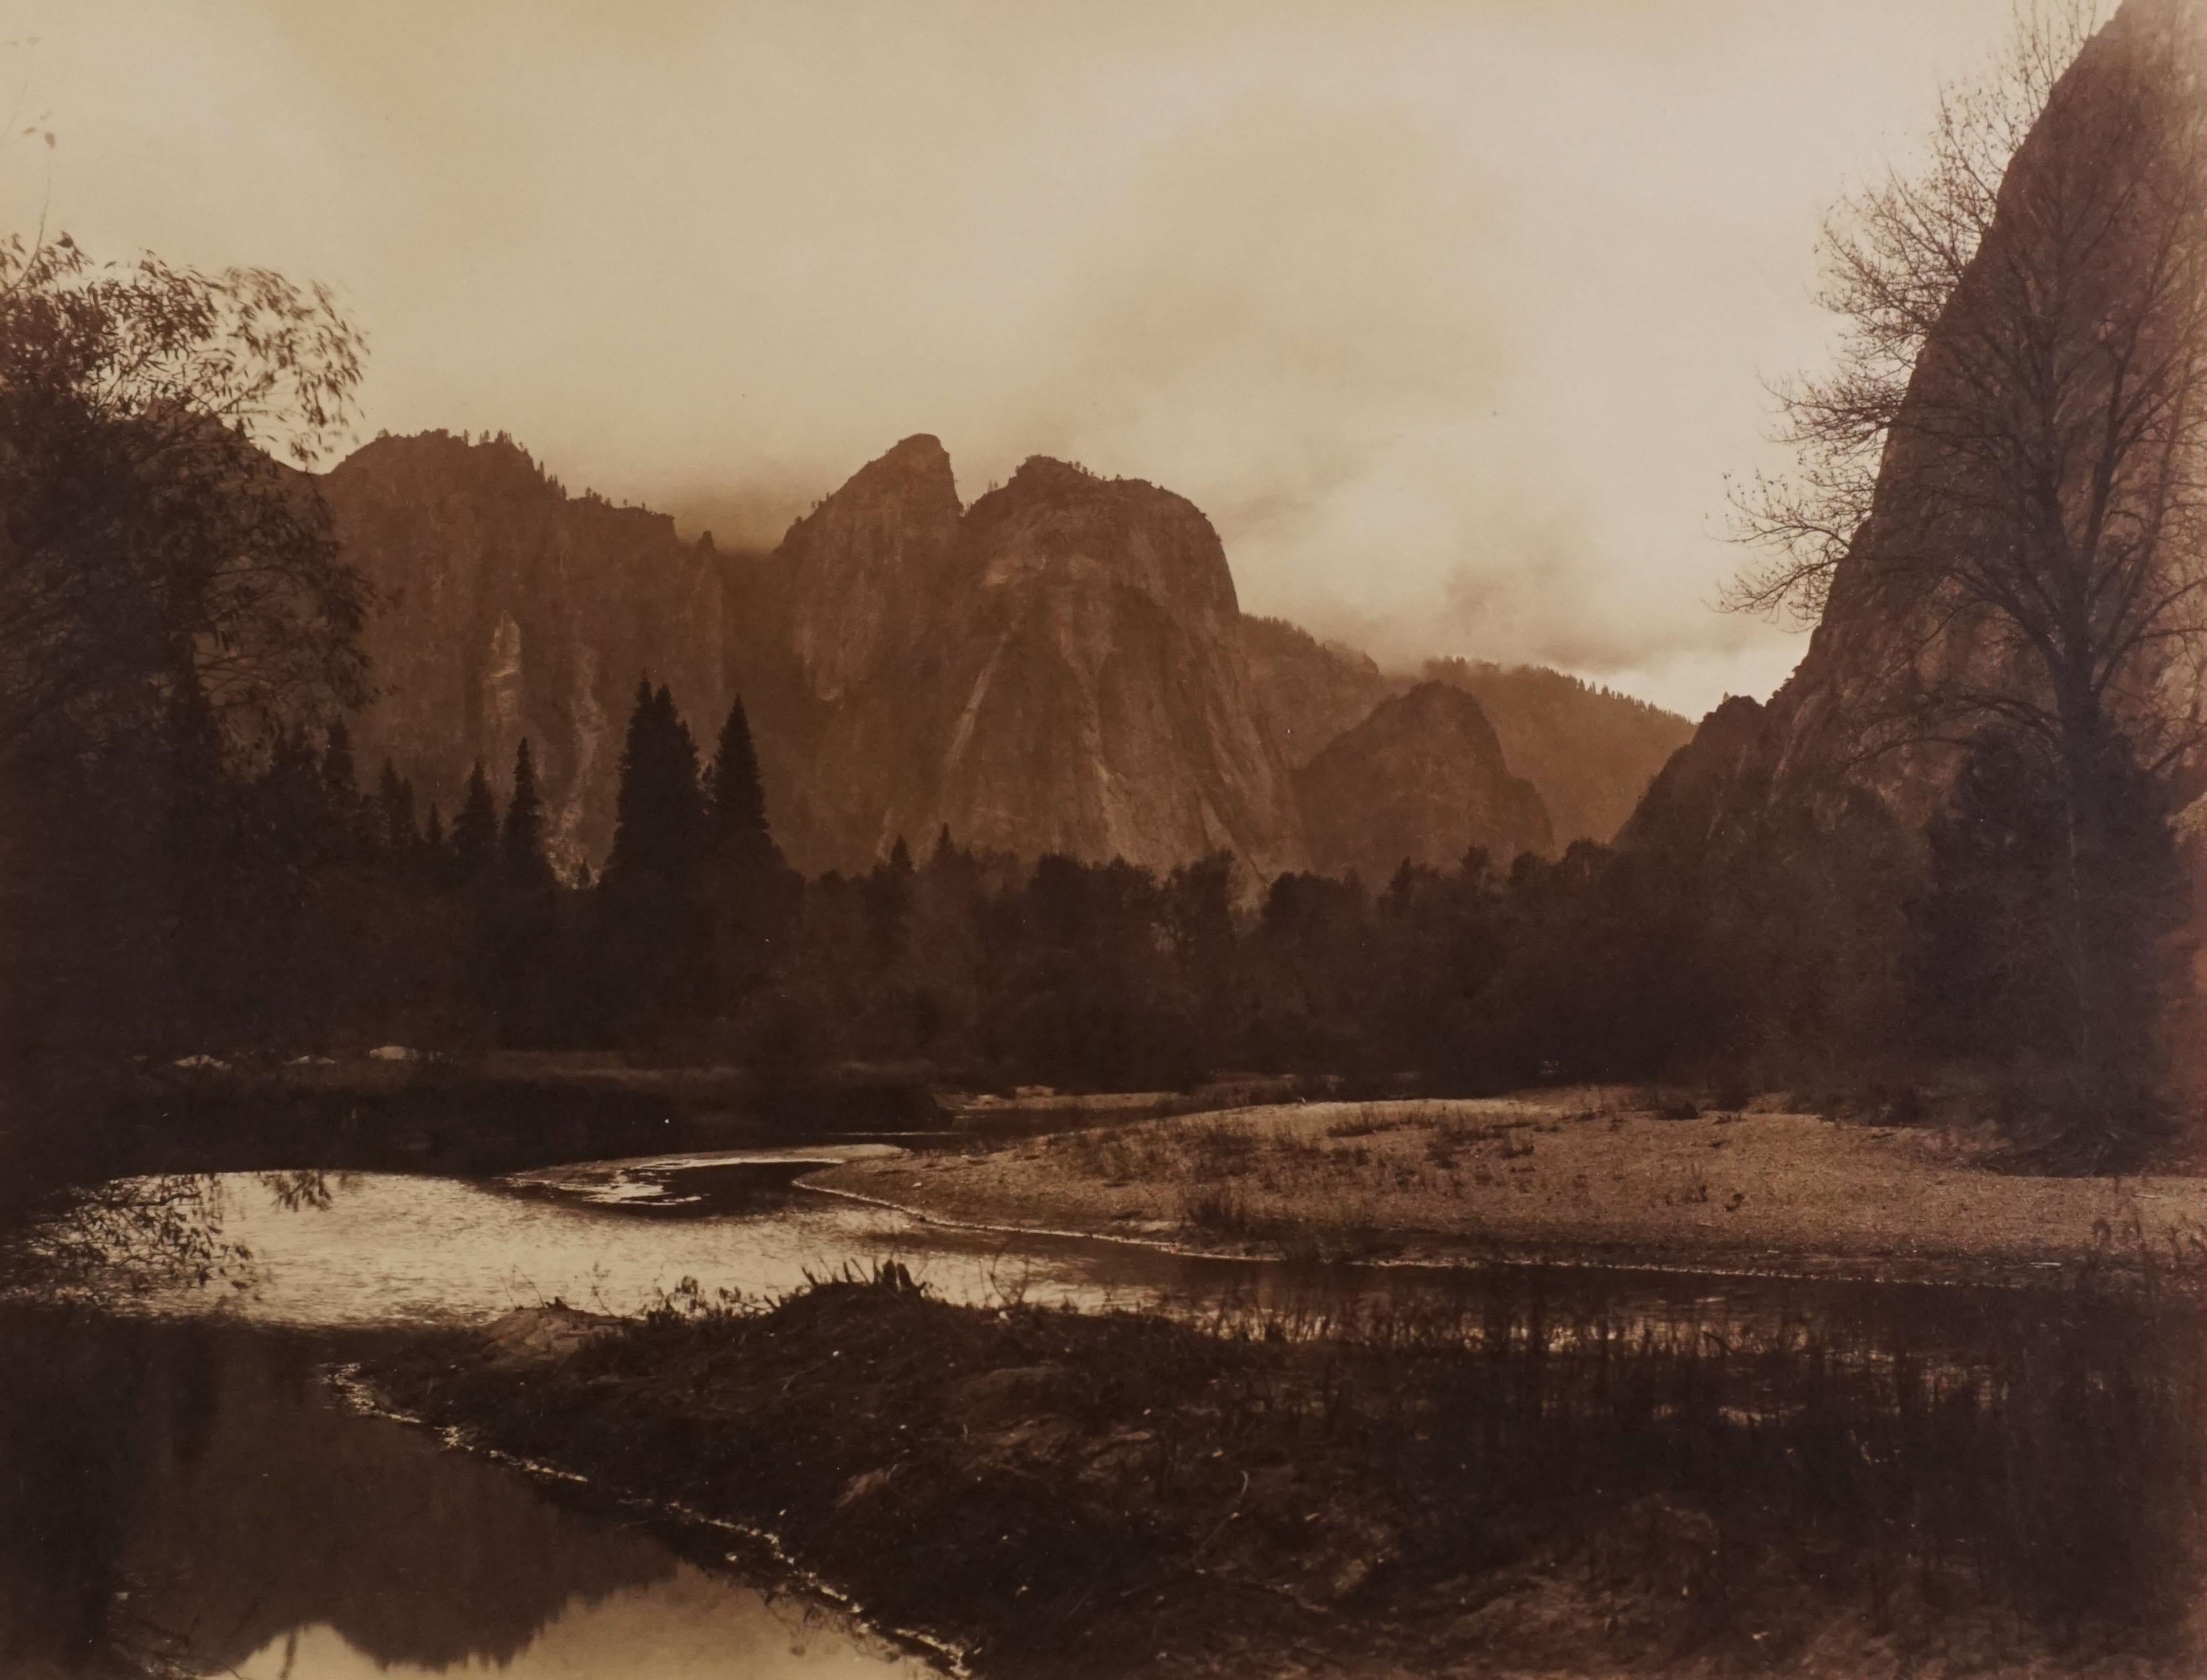 Landscape Photograph George Fiske - Storm breaking over Cathedral Rocks, 1911